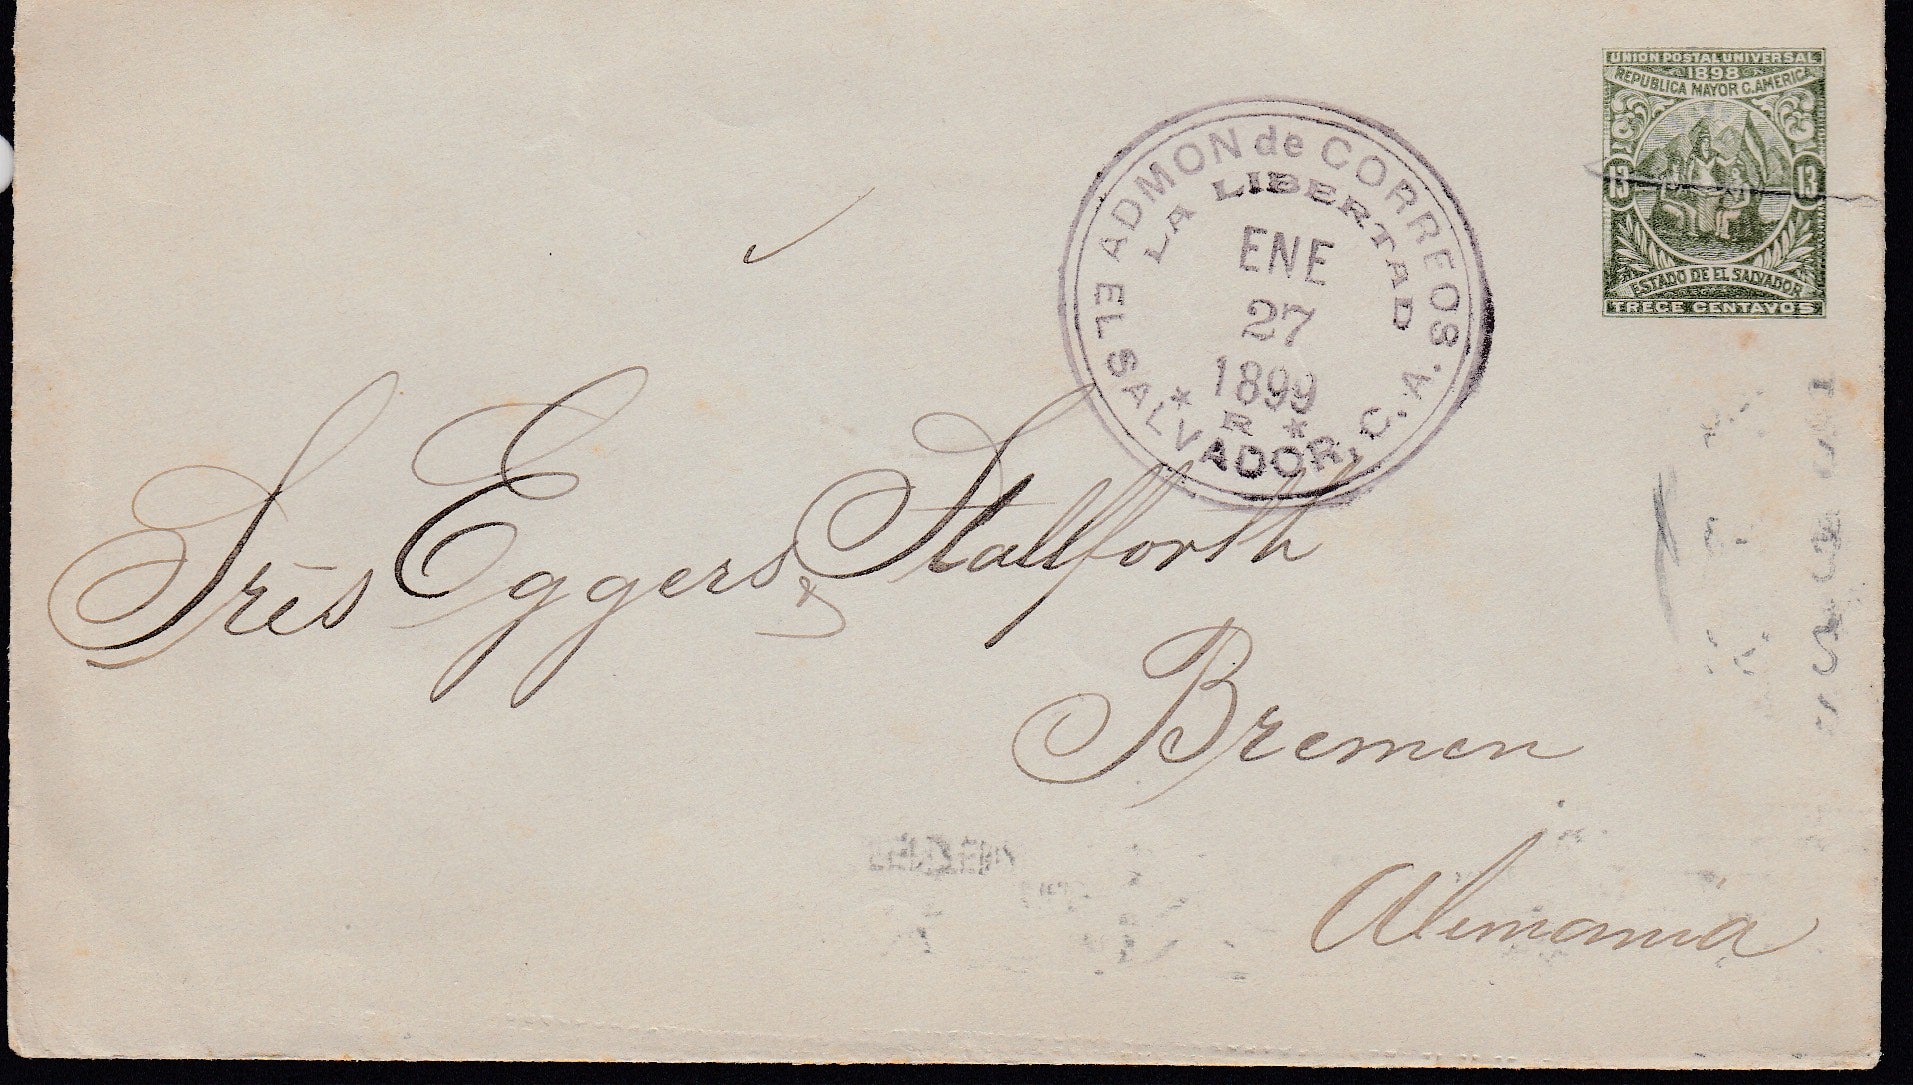 El Salvador 1899 13c Olive Postal Envelope from La Libertad to Bremen, Germany